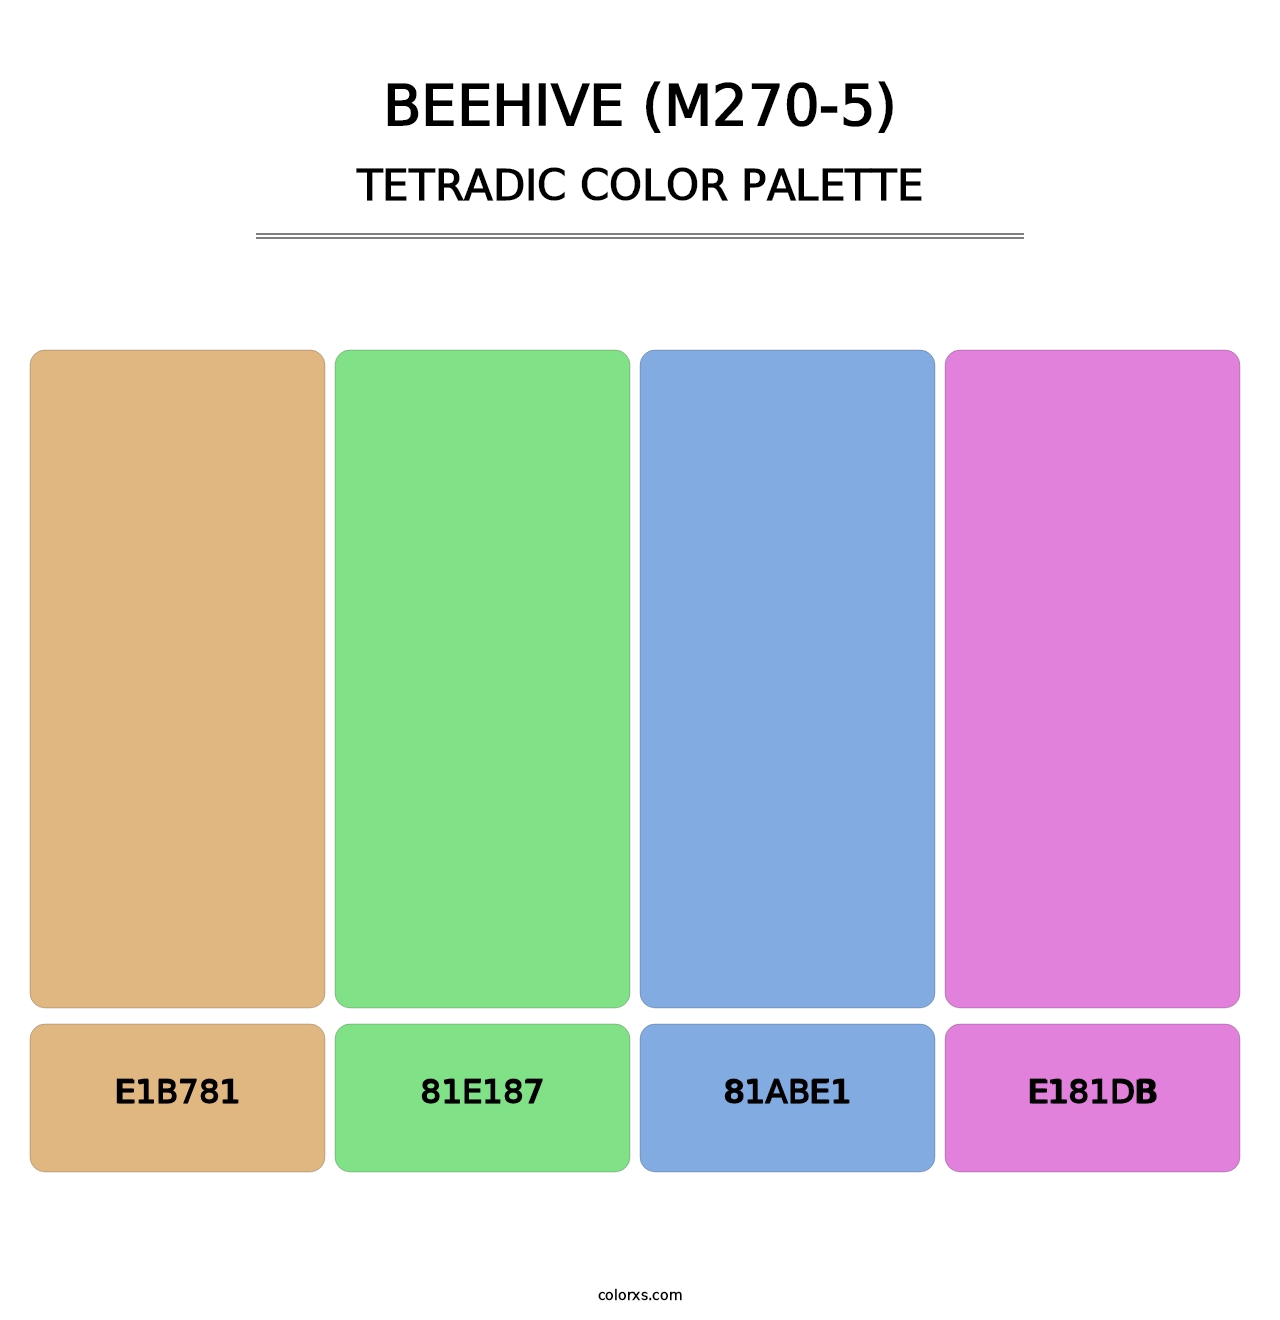 Beehive (M270-5) - Tetradic Color Palette